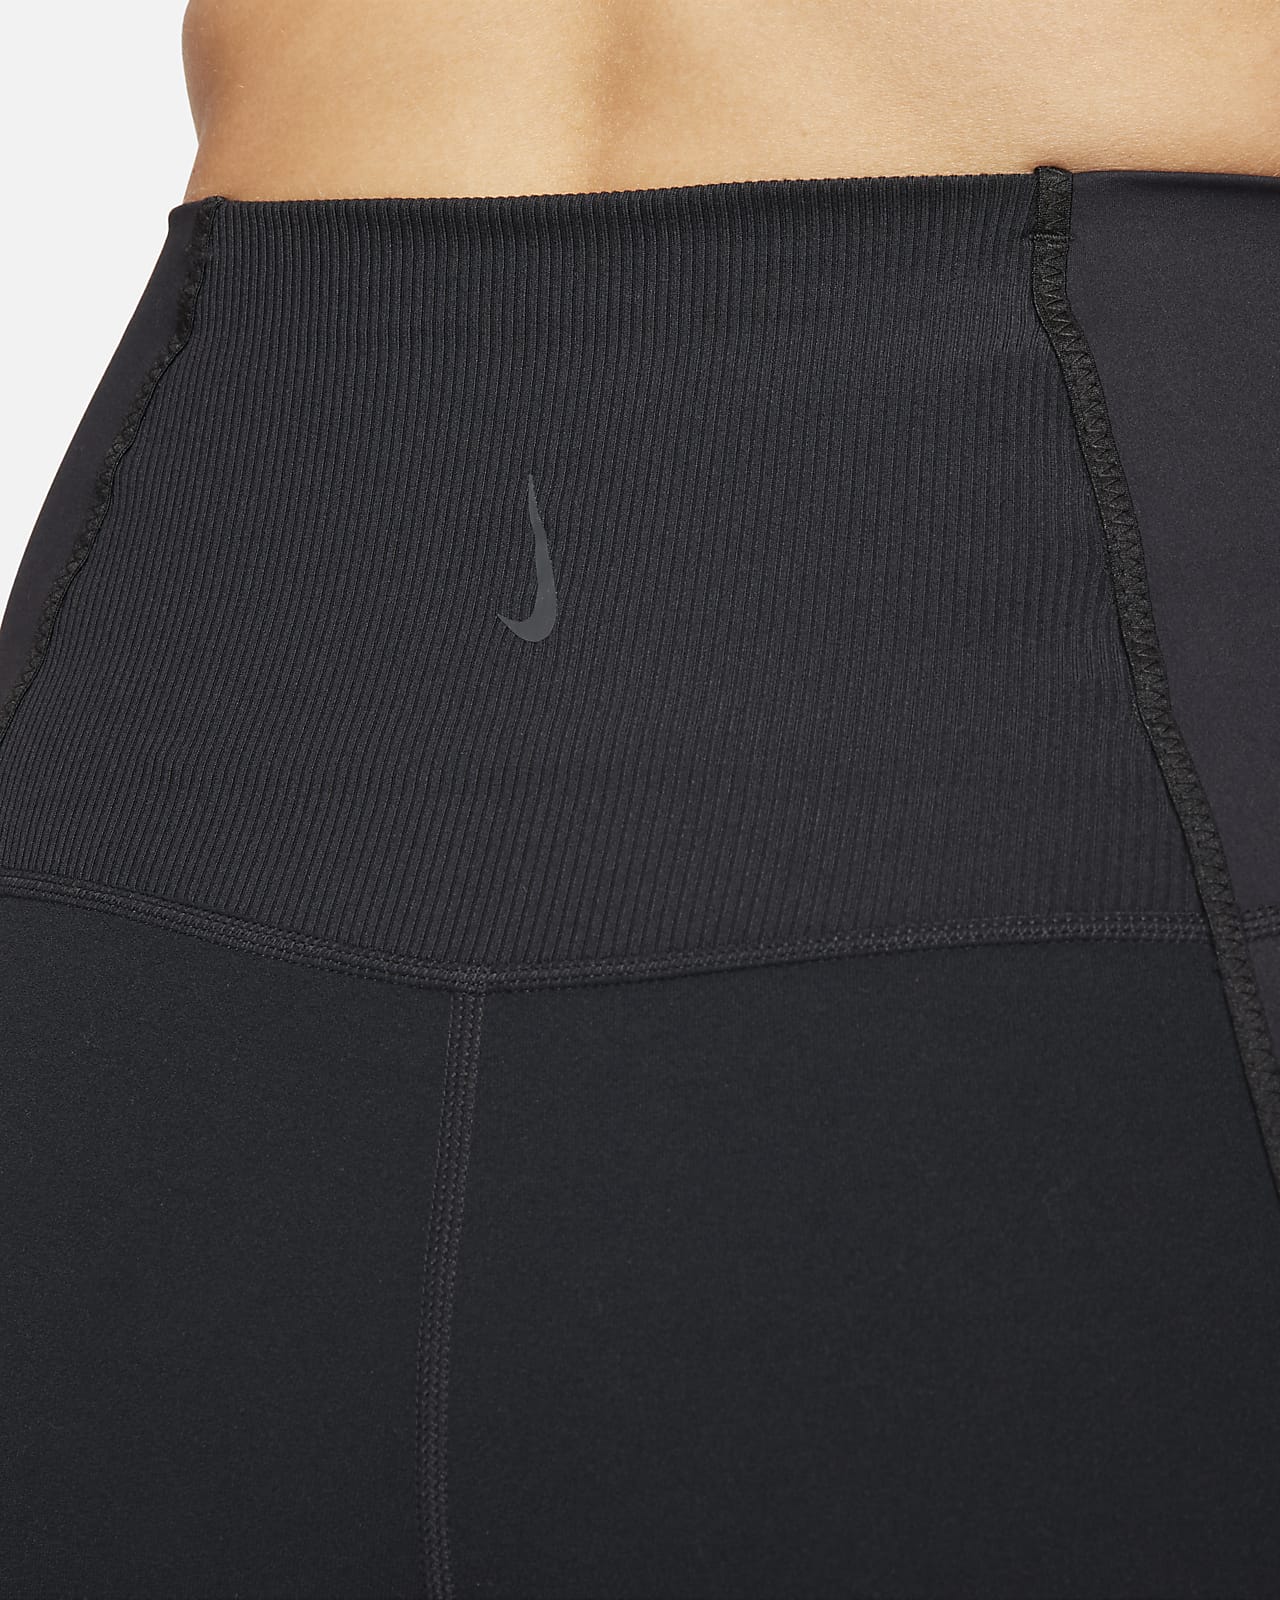 Leggings de tela Infinalon con cintura alta de 7/8 para mujer Nike Yoga  Dri-FIT Luxe